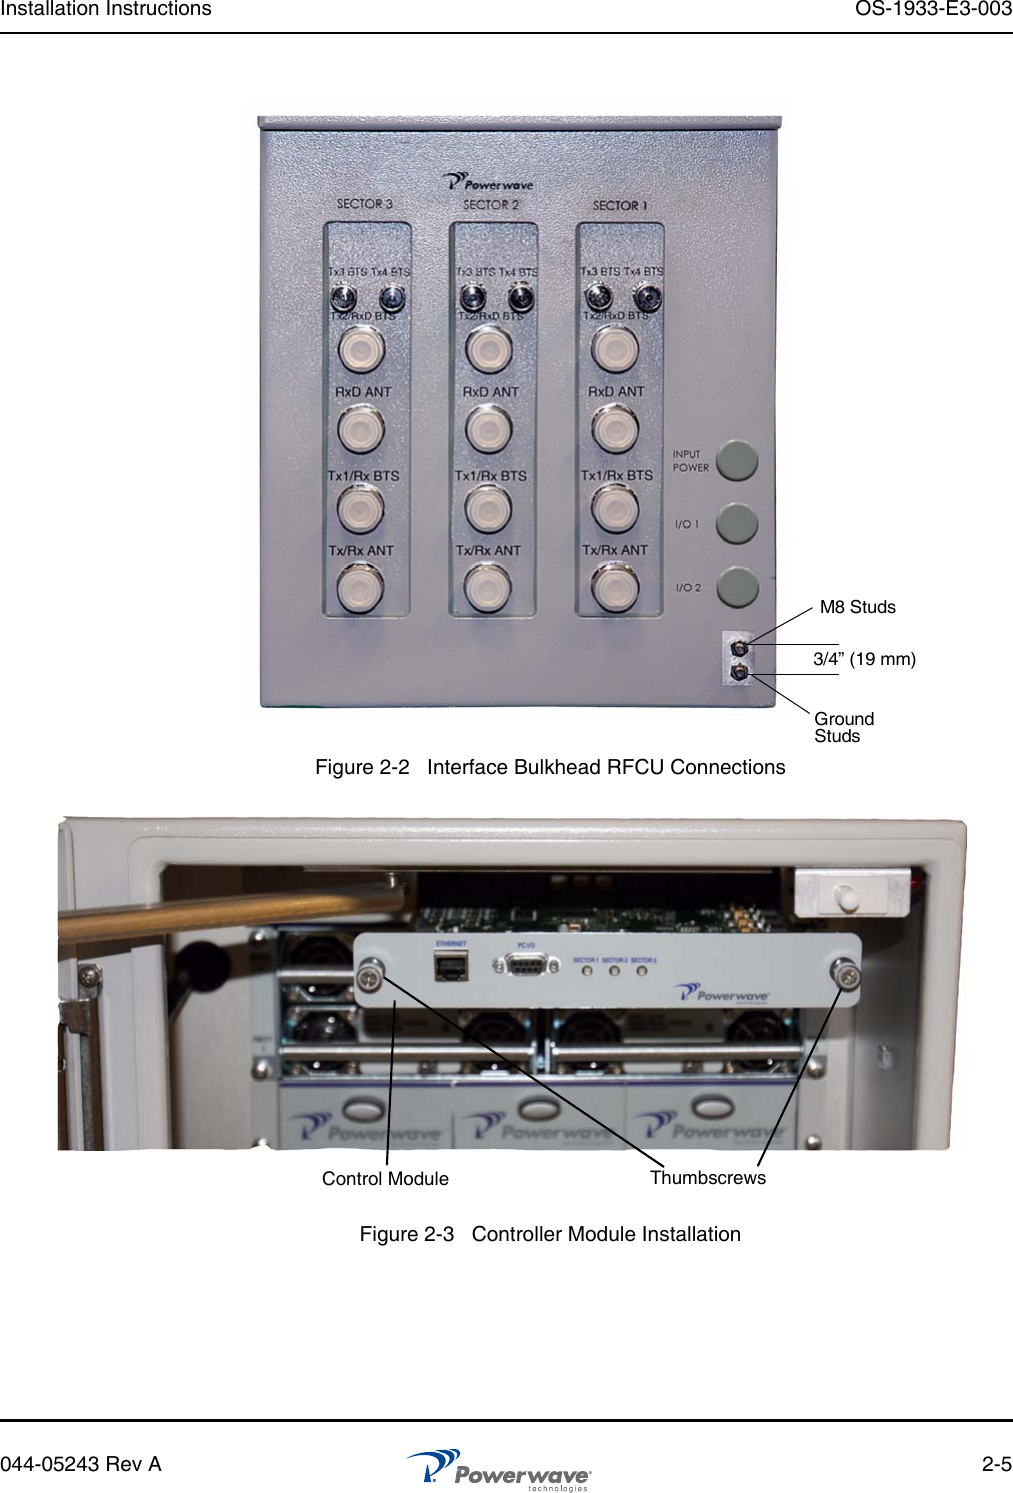 Installation Instructions OS-1933-E3-003044-05243 Rev A 2-5Figure 2-2   Interface Bulkhead RFCU ConnectionsFigure 2-3   Controller Module InstallationGroundStudsM8 Studs3/4” (19 mm)Control Module Thumbscrews